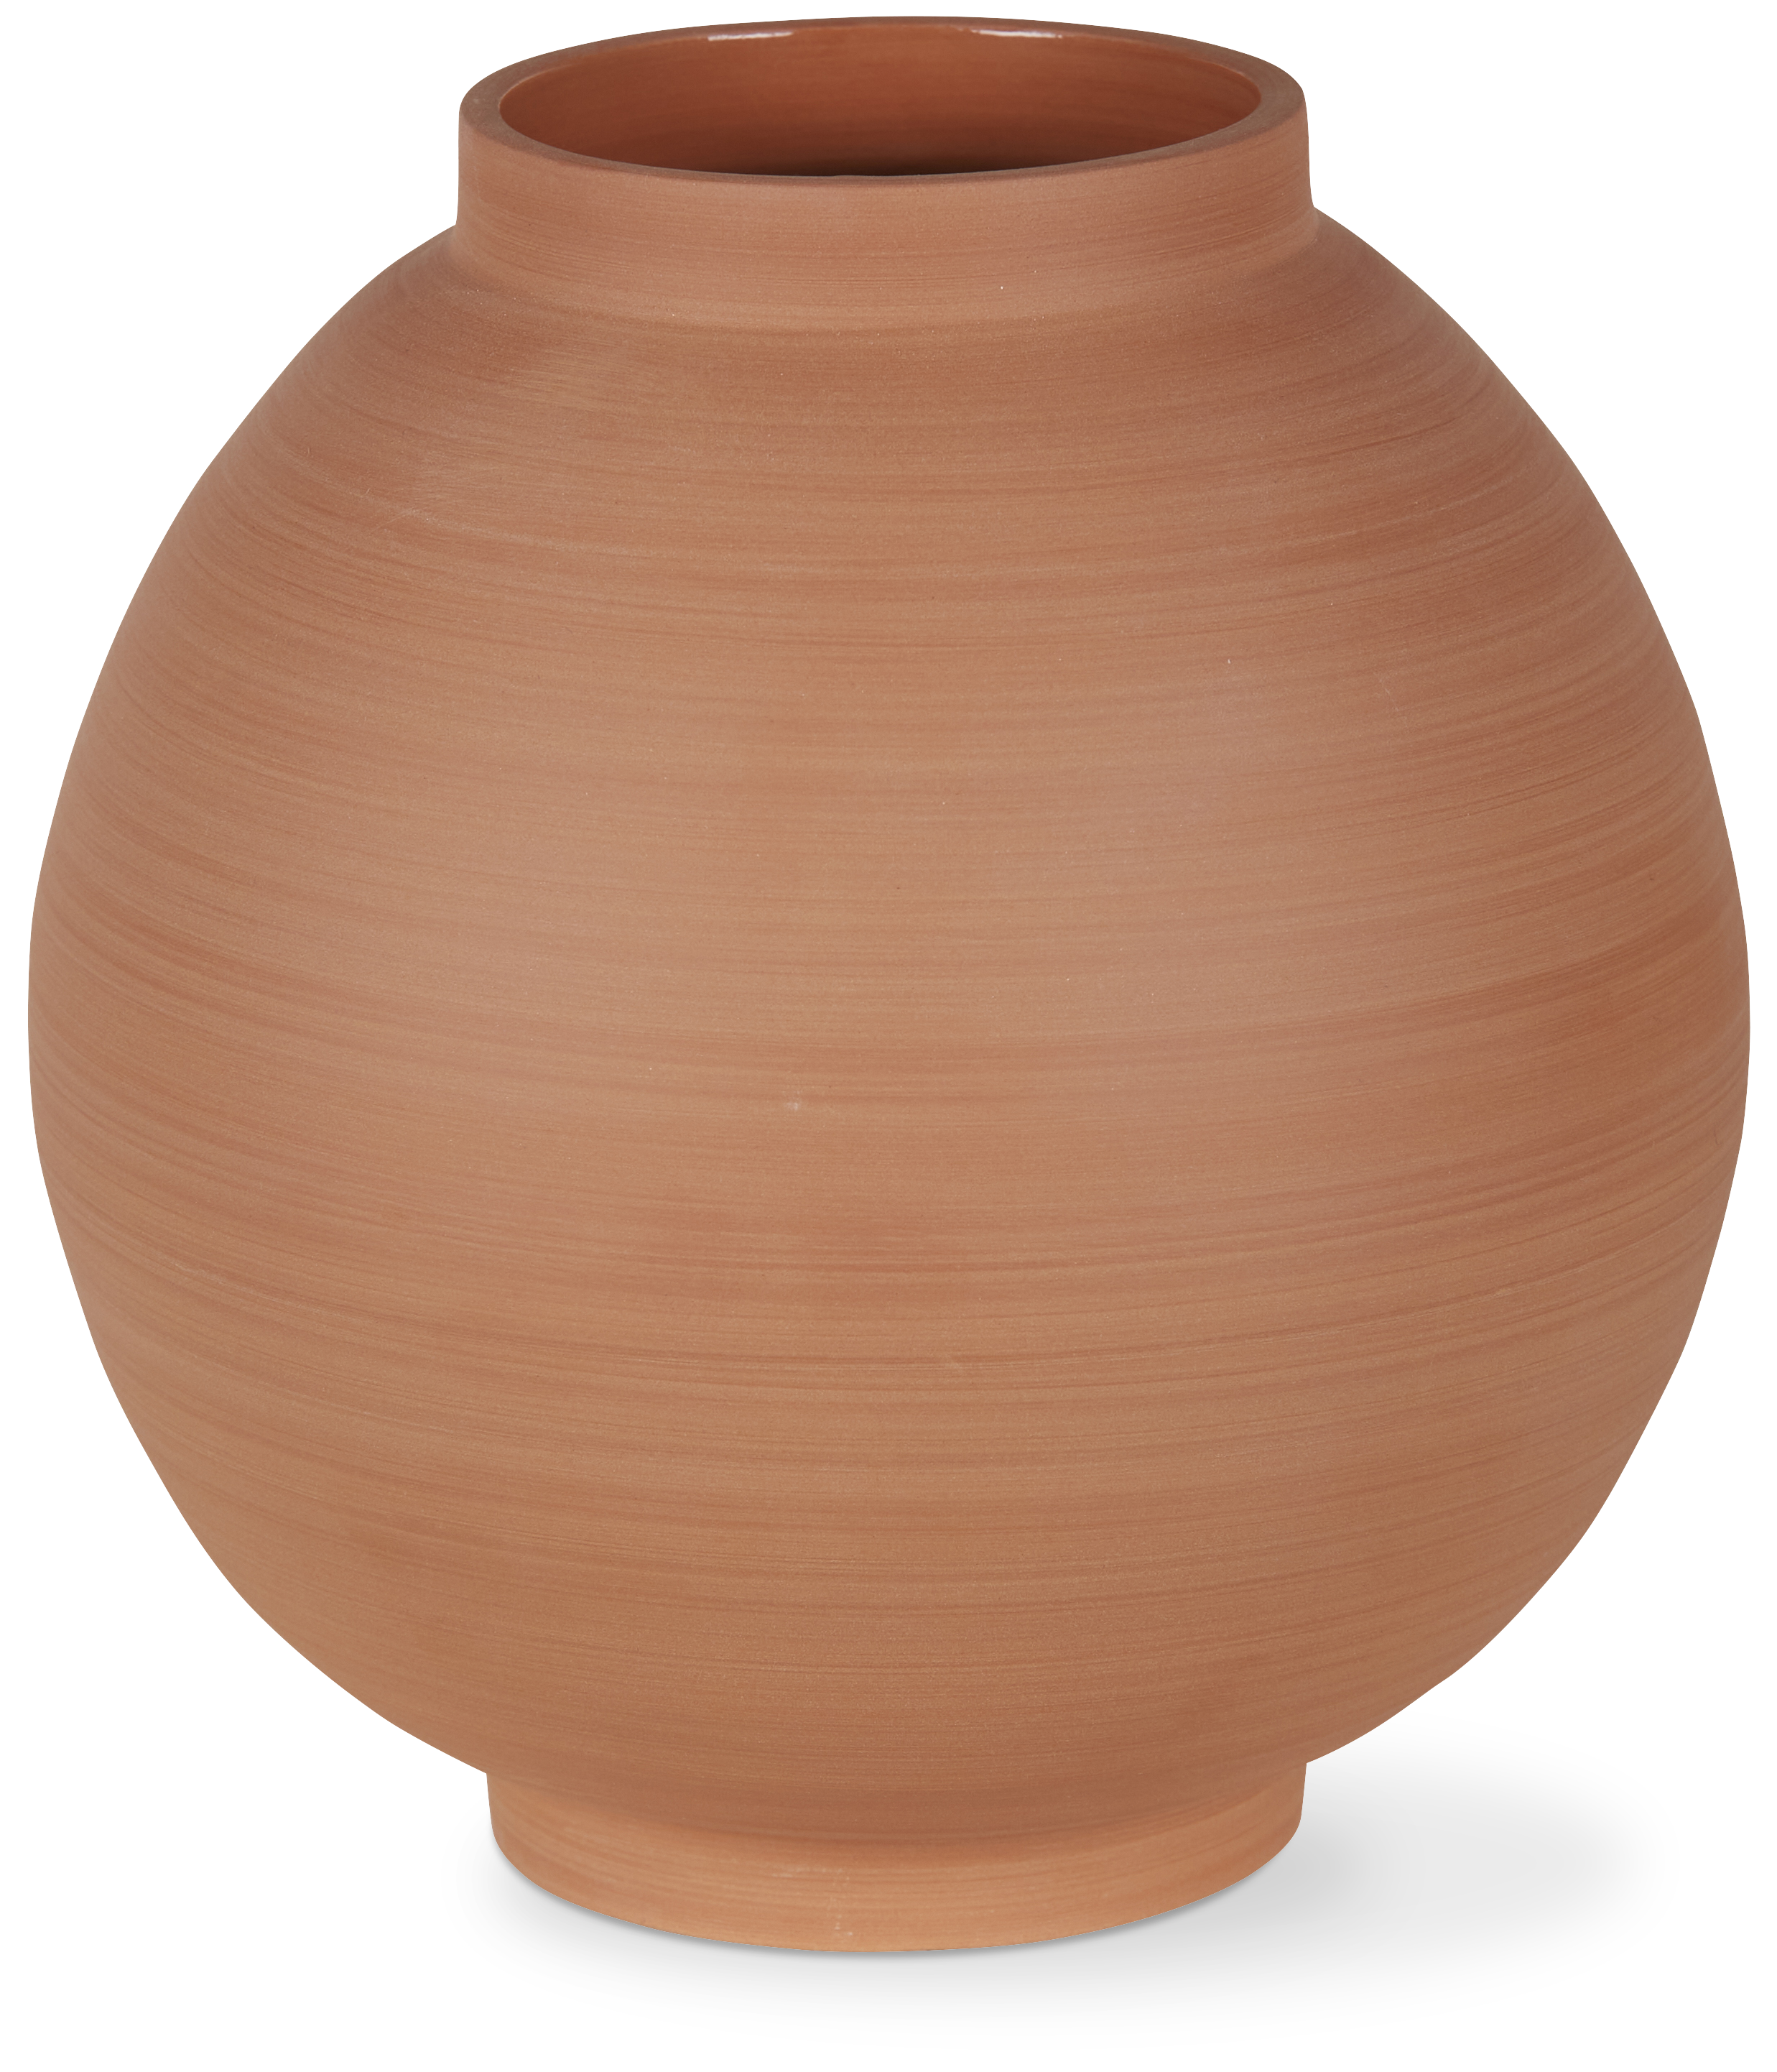 Clay vas